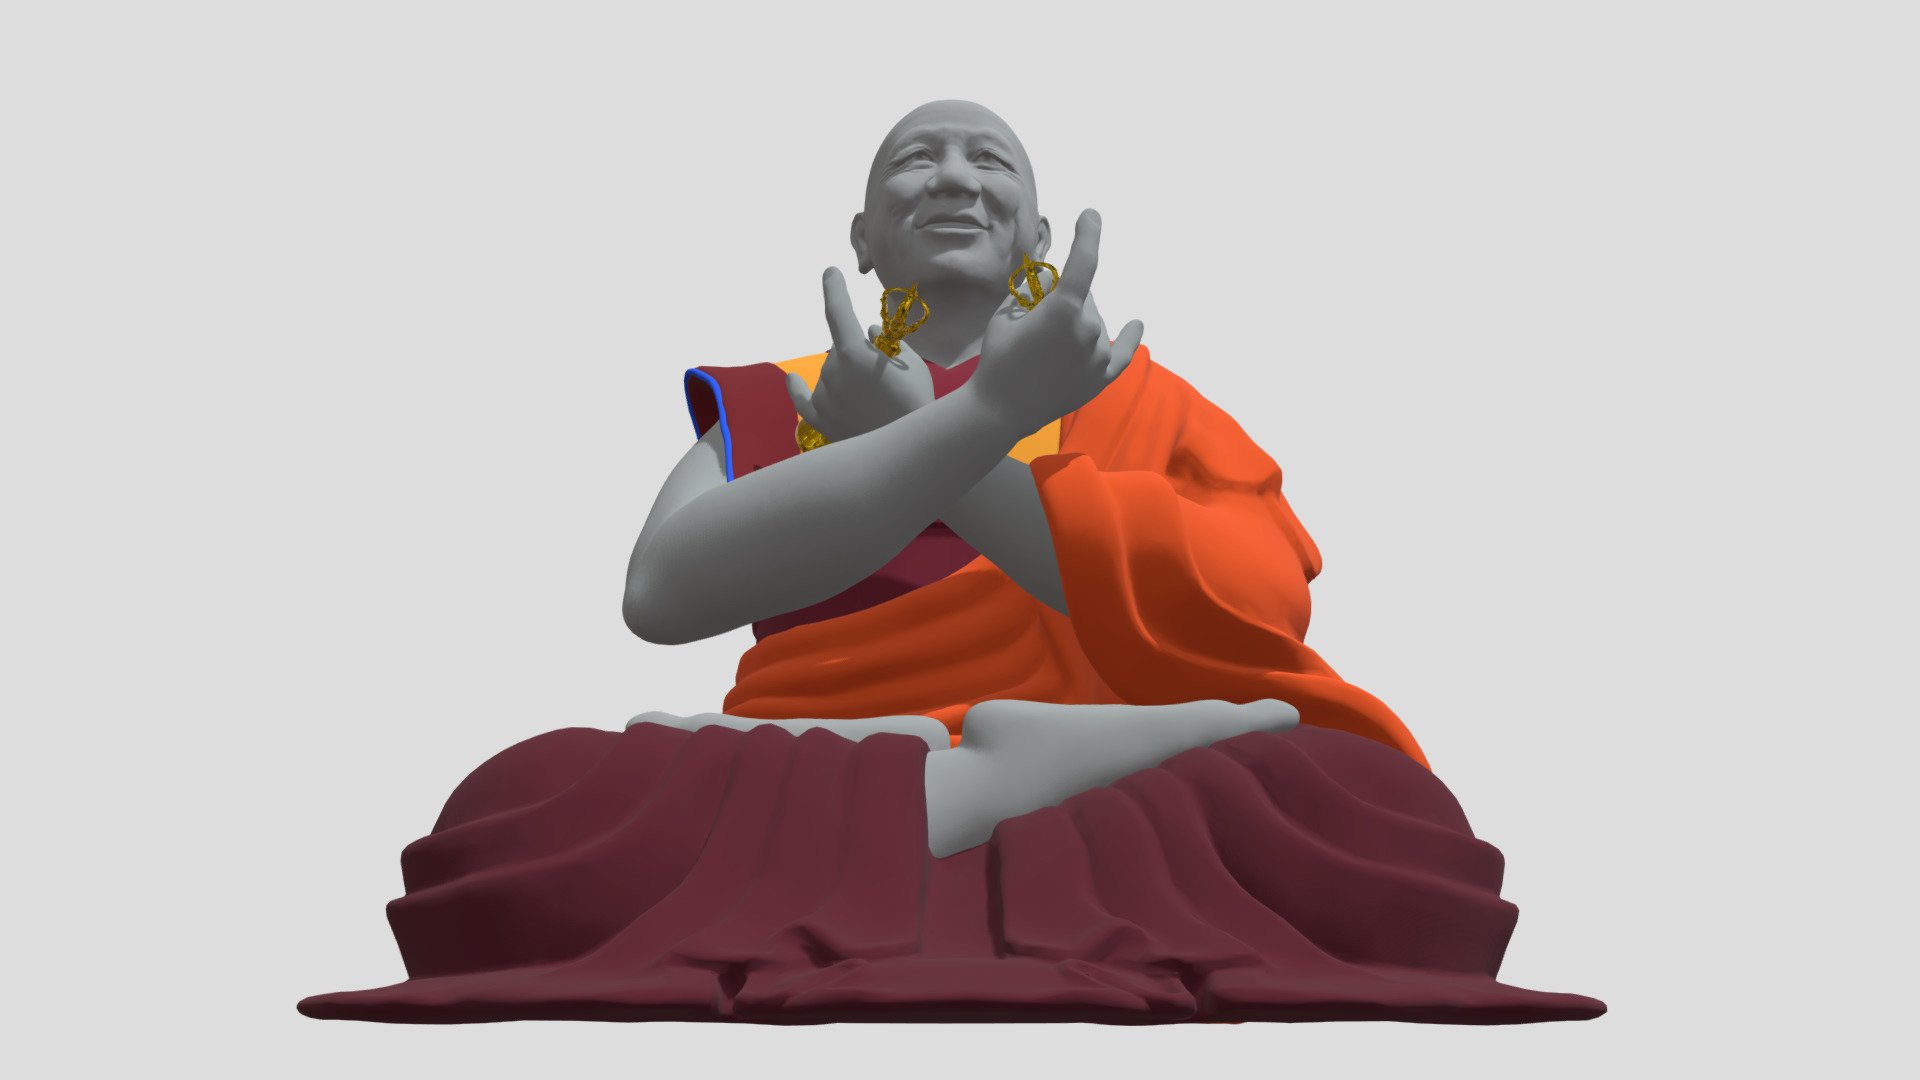 Kyabje Khensur Kangurwa Lobsang Thubten Rinpoche